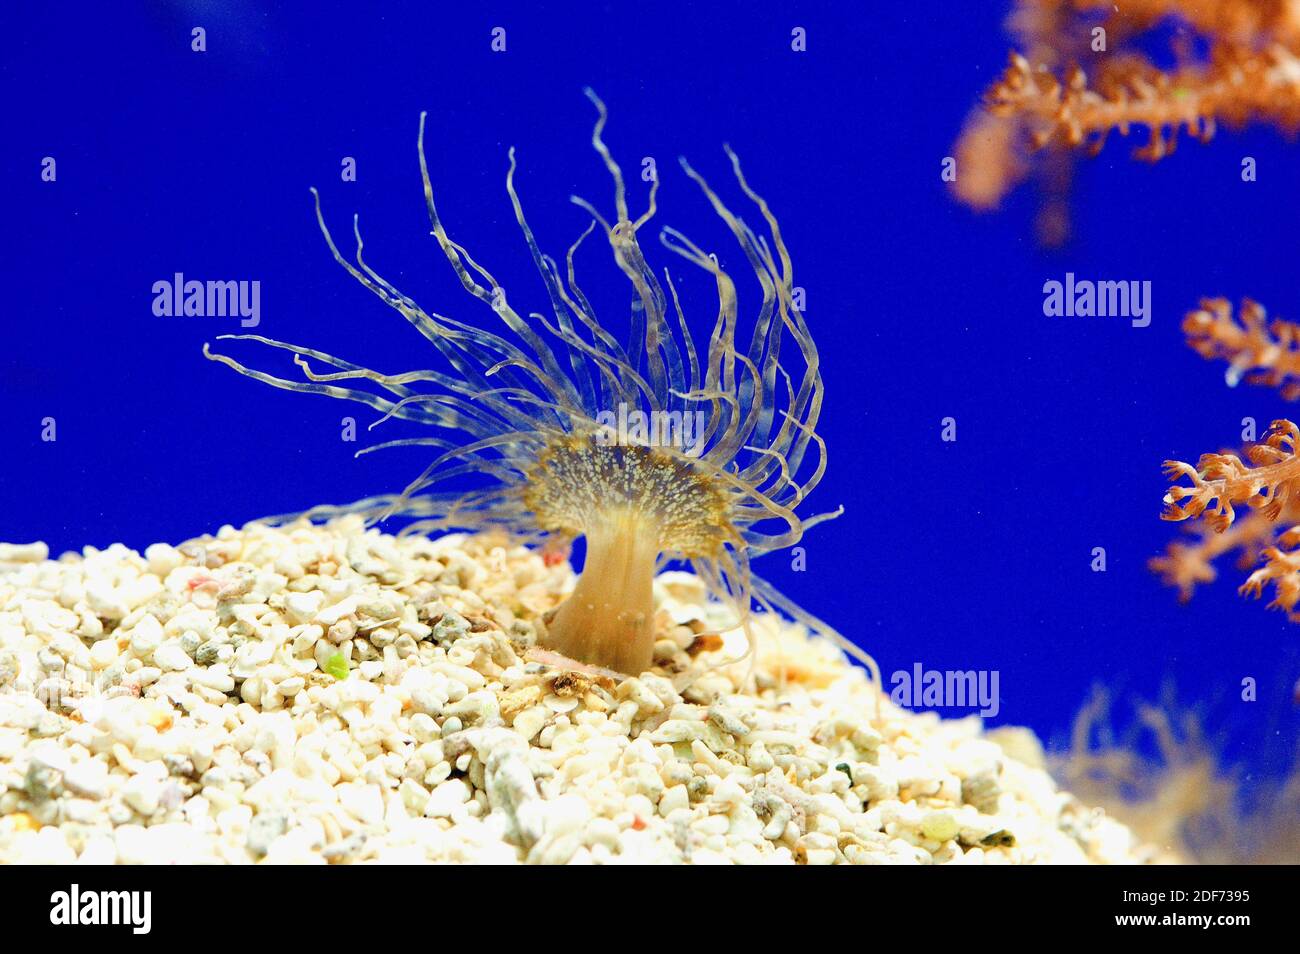 Aiptasia mutabilis is a sea anemone that contains symbiotic algae. Cnidaria. Anthozoa. This photo was taken in captivity. Stock Photo